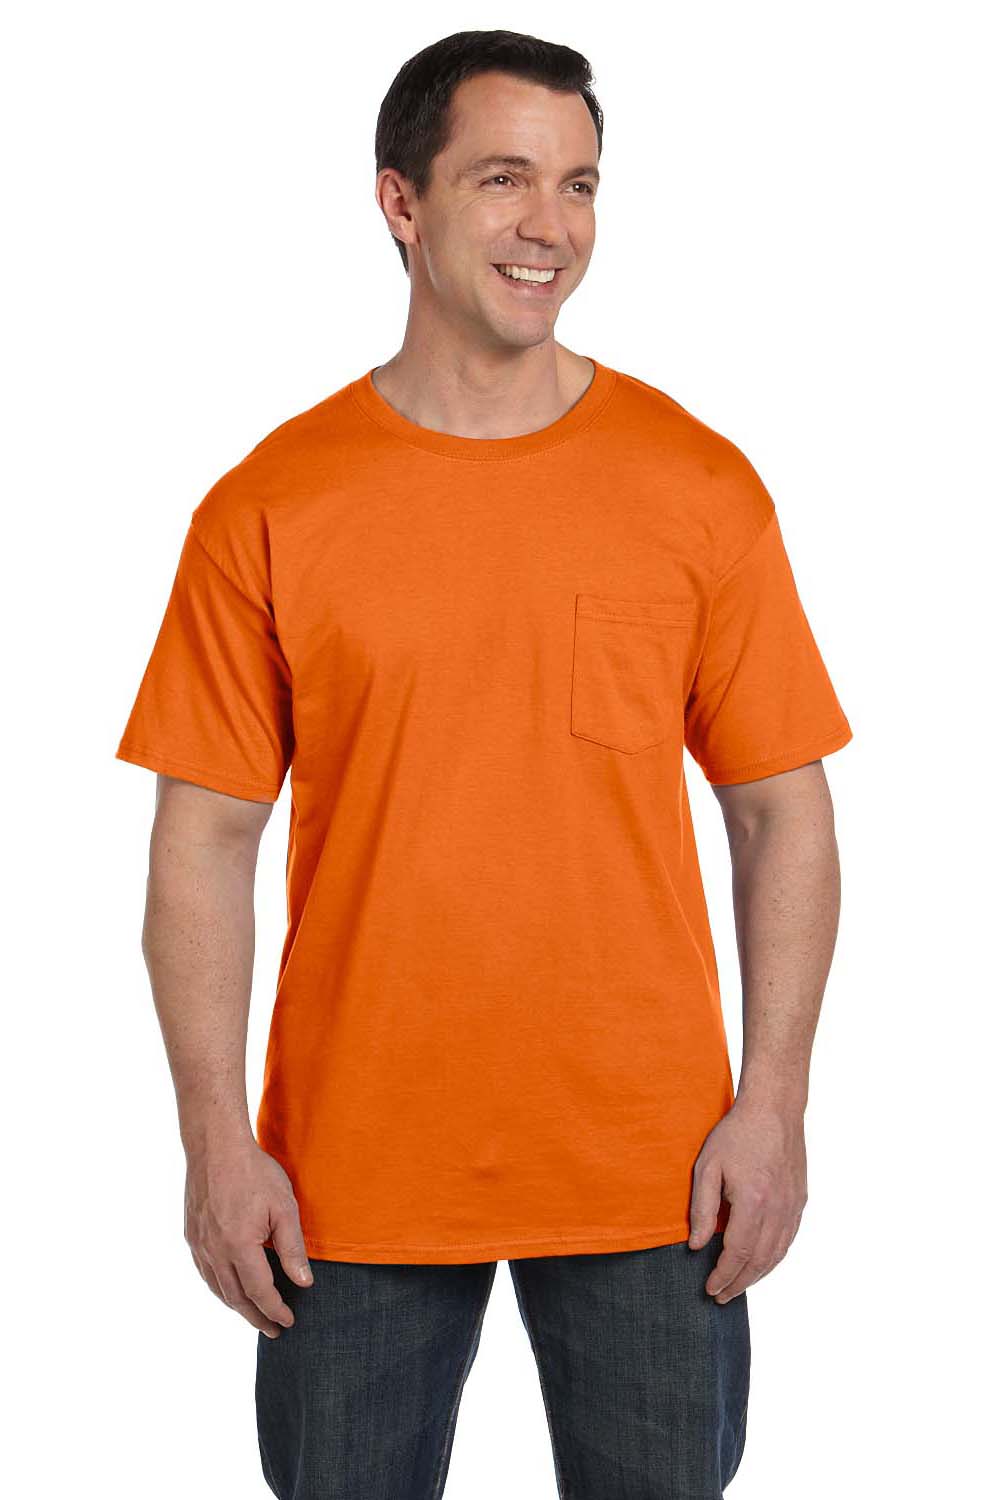 Hanes 5190P Mens Beefy-T Short Sleeve Crewneck T-Shirt w/ Pocket Orange Front